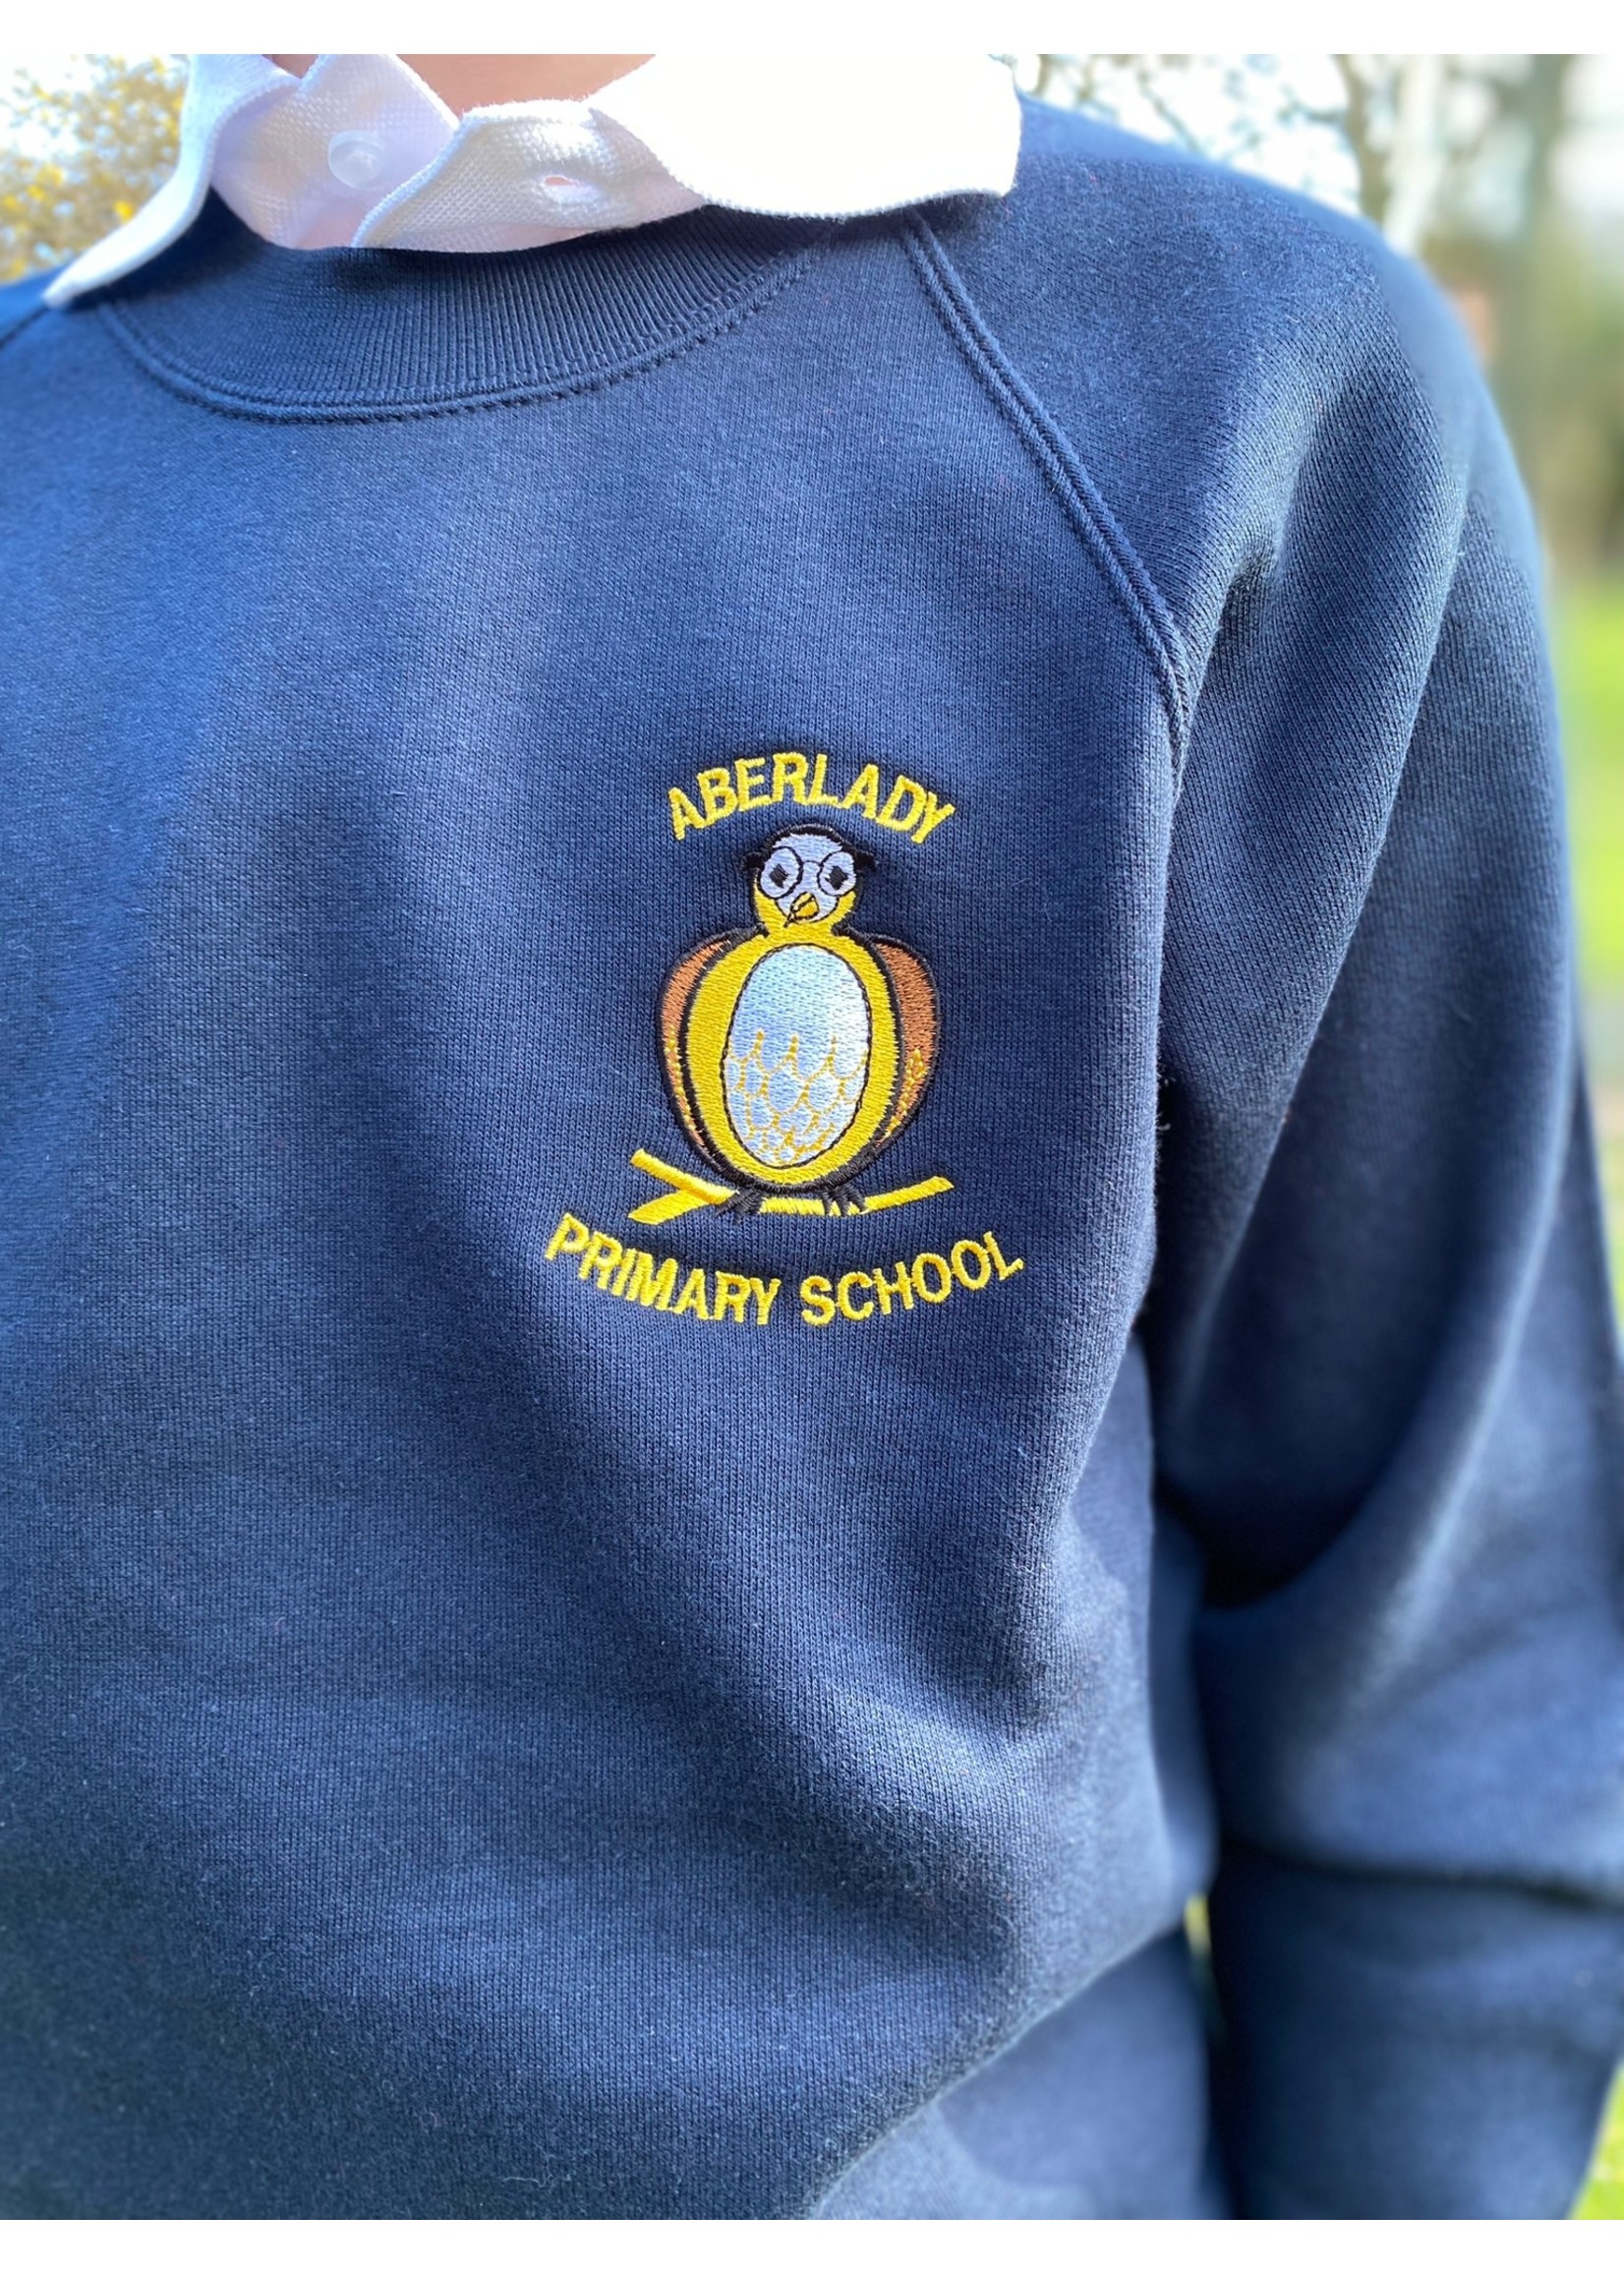 School Uniform - SWEATSHIRT - ABERLADY PRIMARY